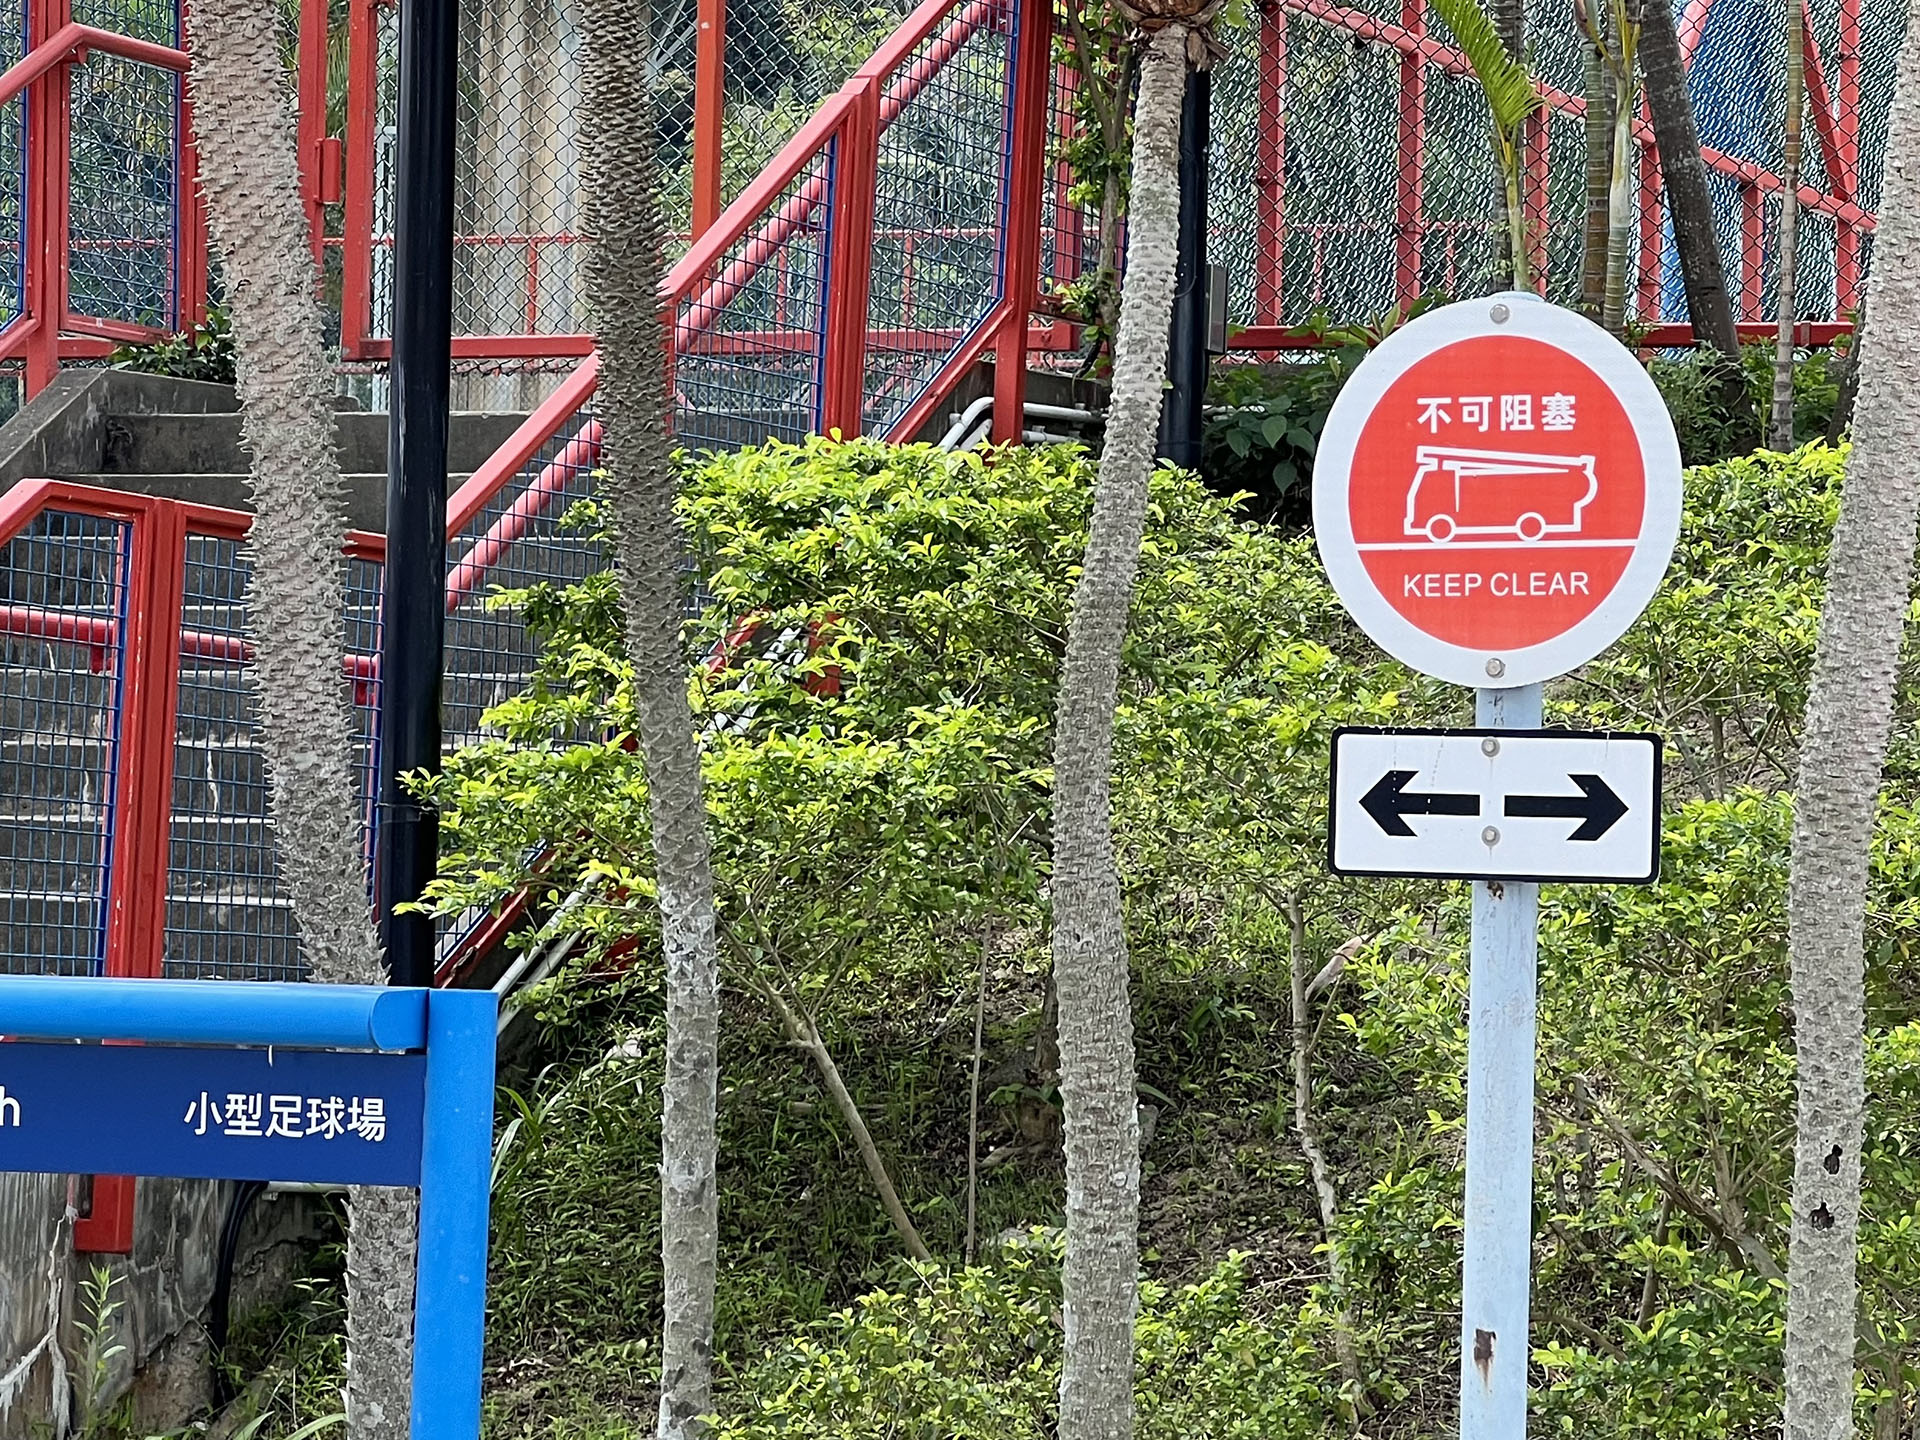 HKUST海边区域“不可阻塞”交通标志